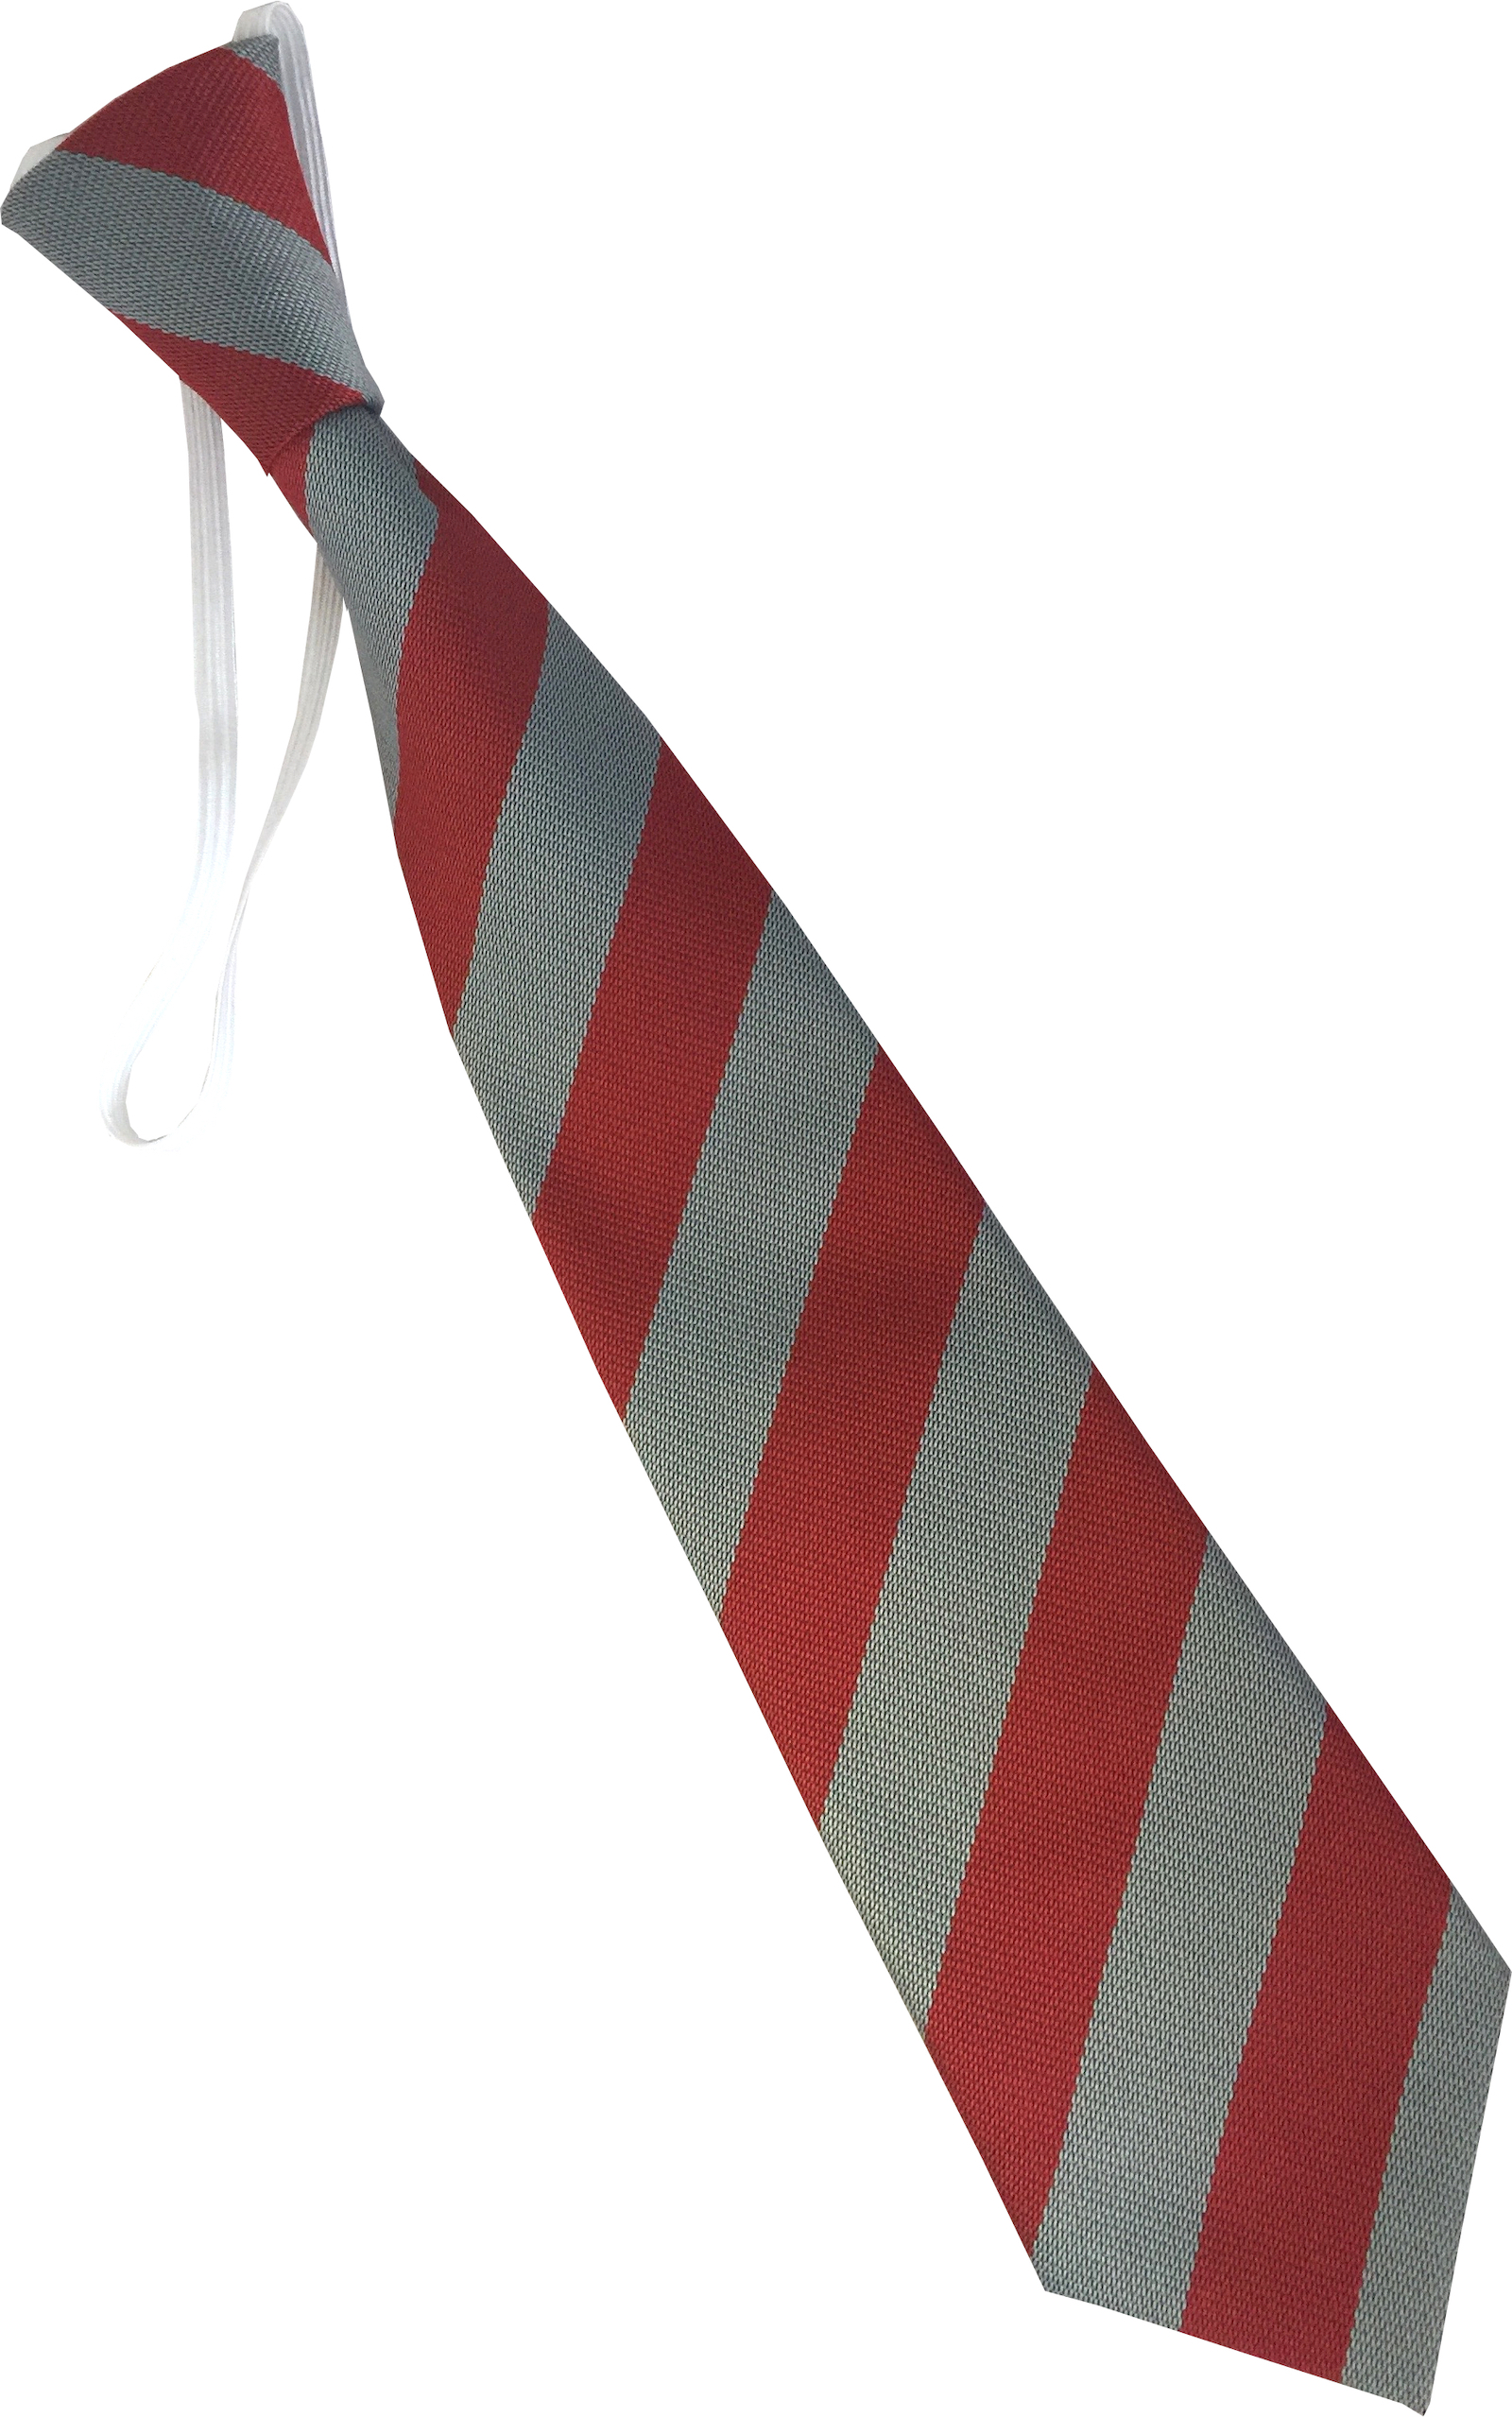 Block Tie in Red, Black, & Gray